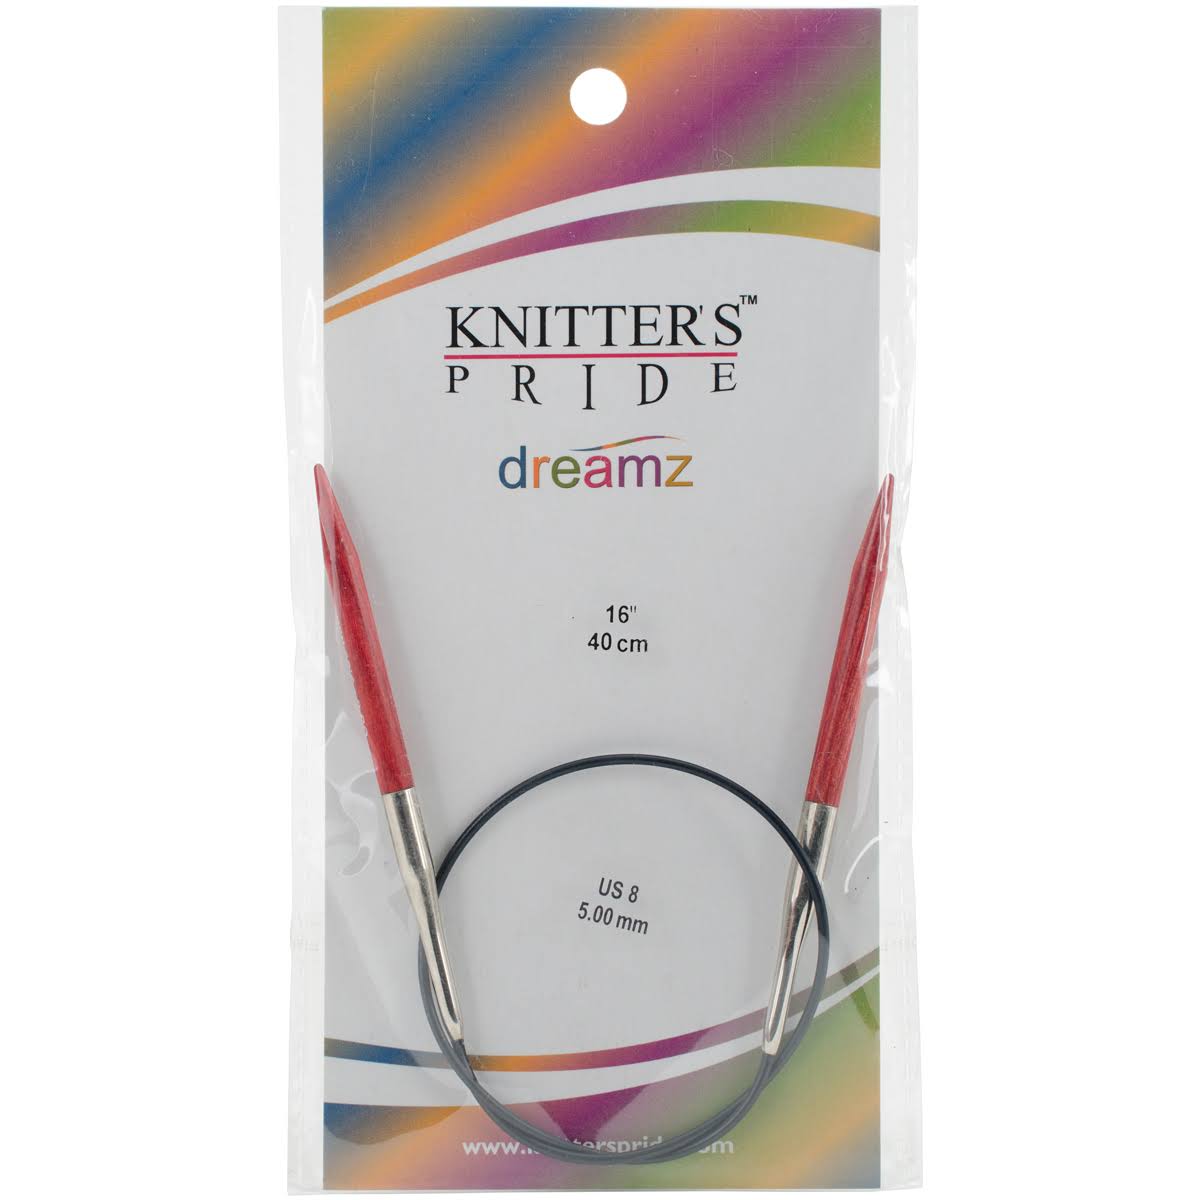 Knitter's Pride Dreamz Circular Knitting Needles - Size 8, 5mm